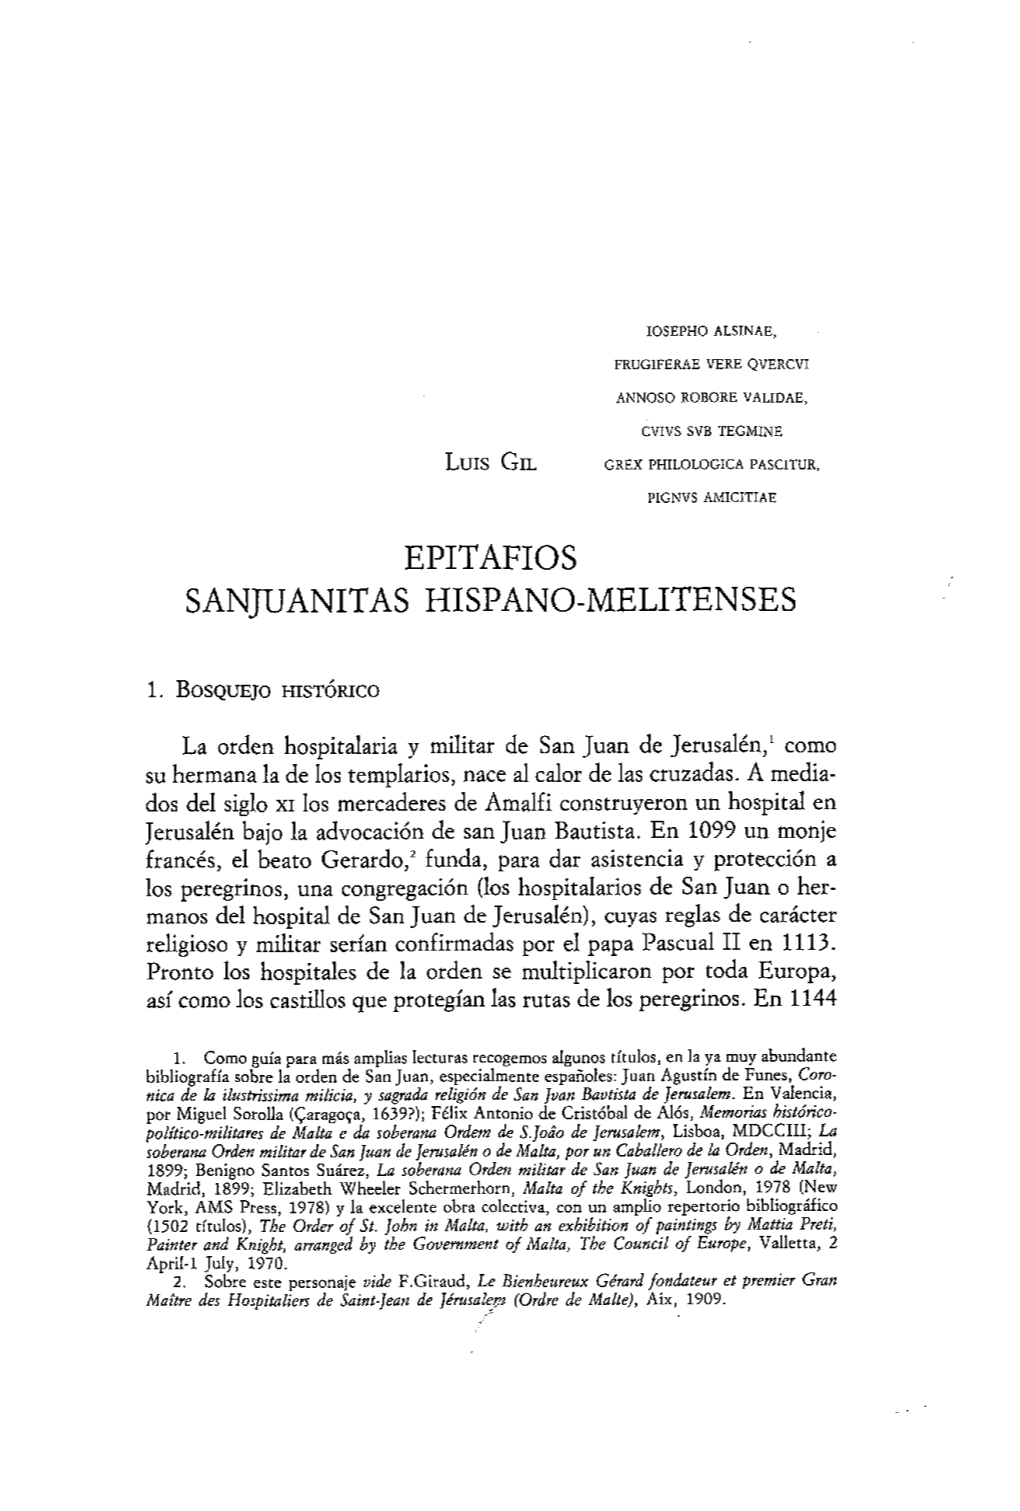 Epitafios Sanjuanitas Hispano-Melitenses